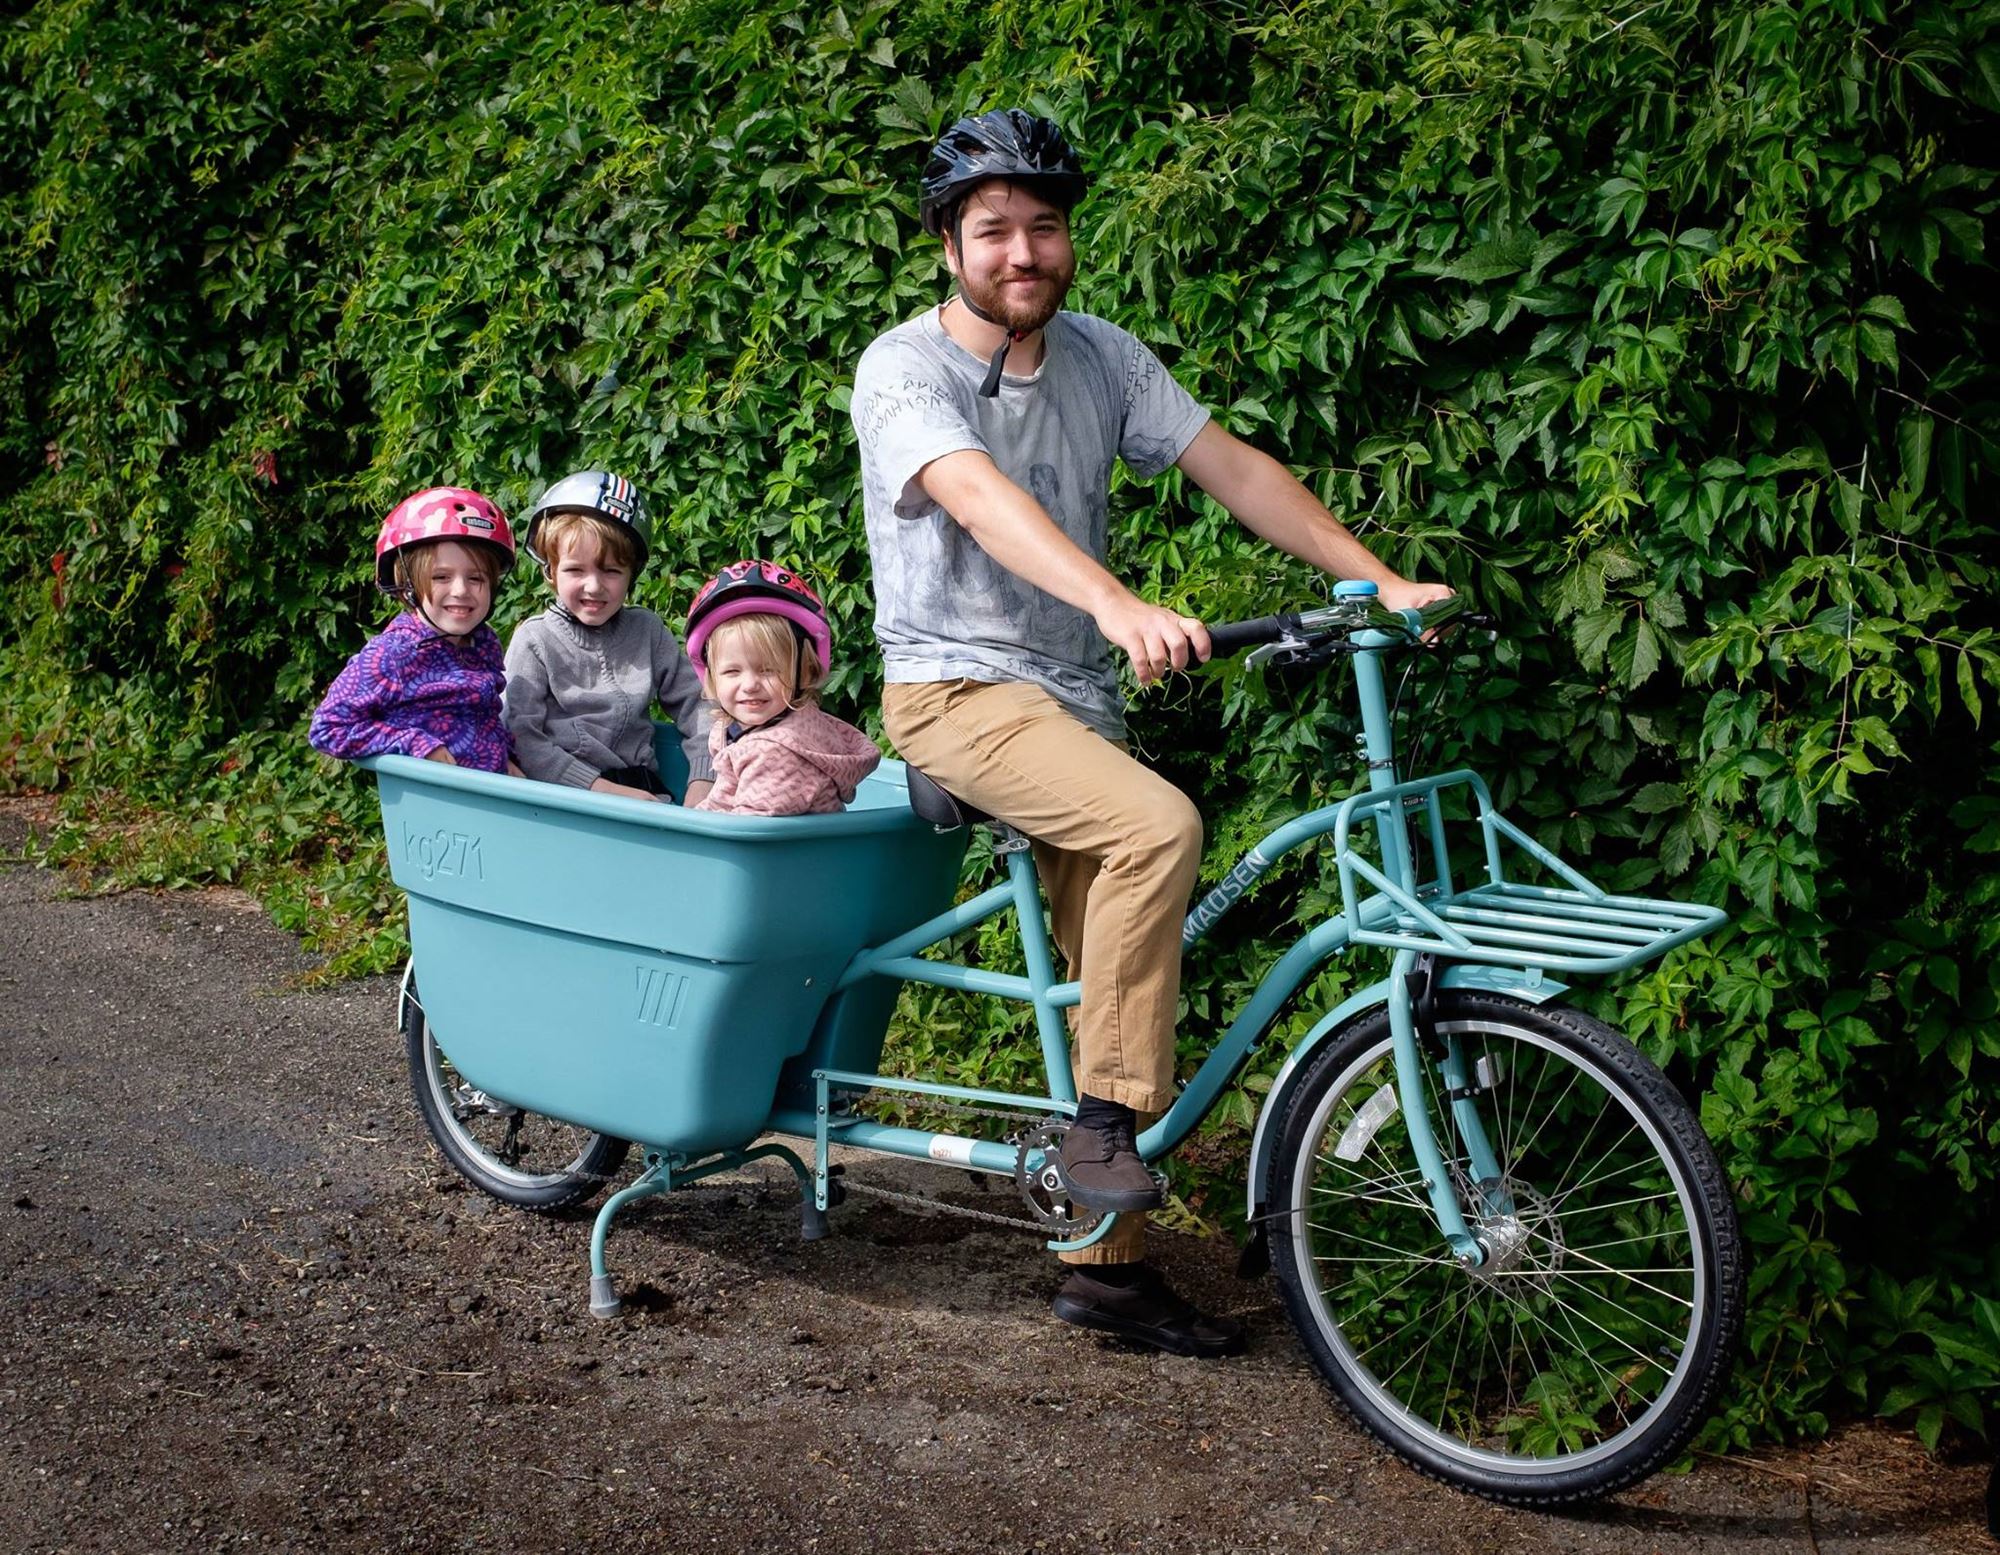 Profile with kids and bike